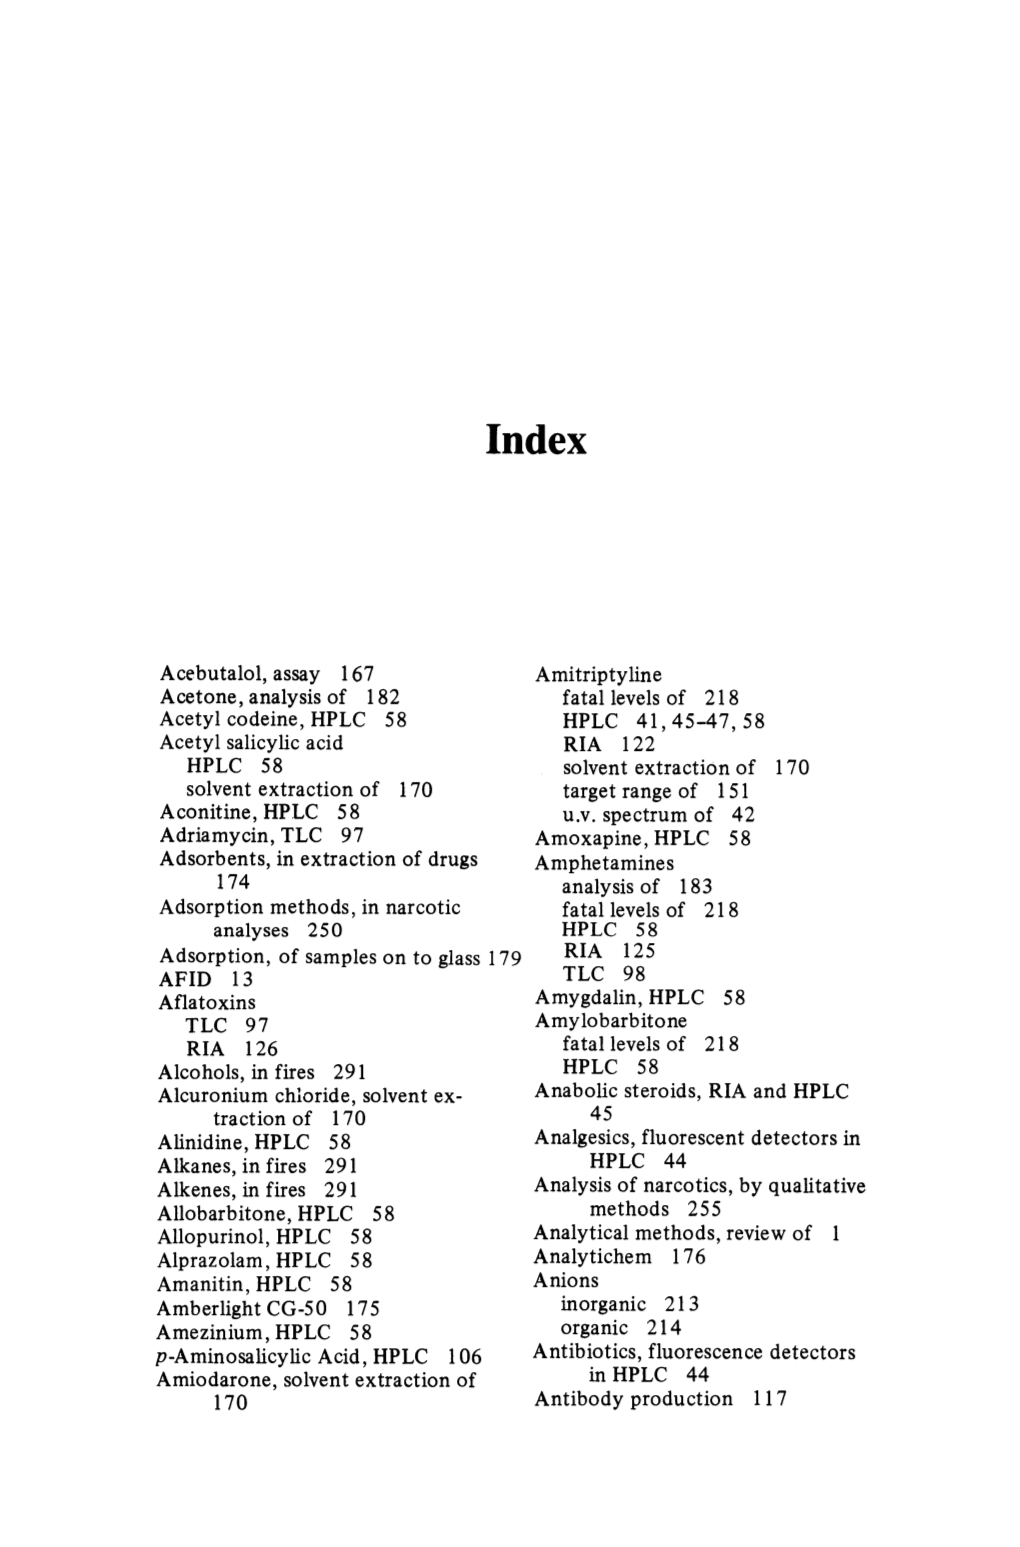 Acebutalol, Assay 167 Acetone, Analysis of 182 Acetyl Codeine